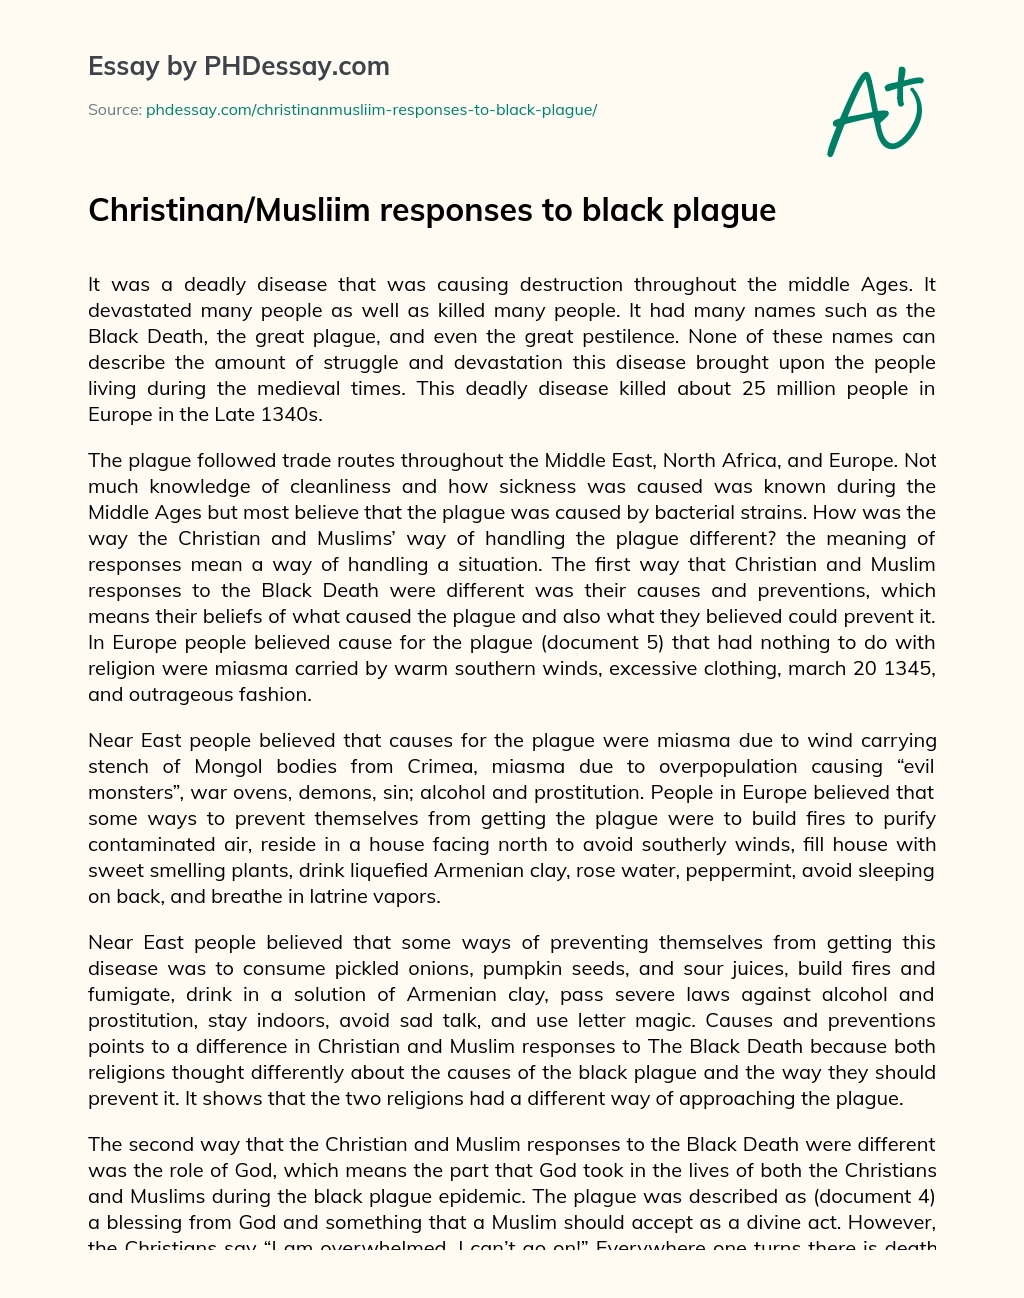 Christinan/Musliim responses to black plague essay